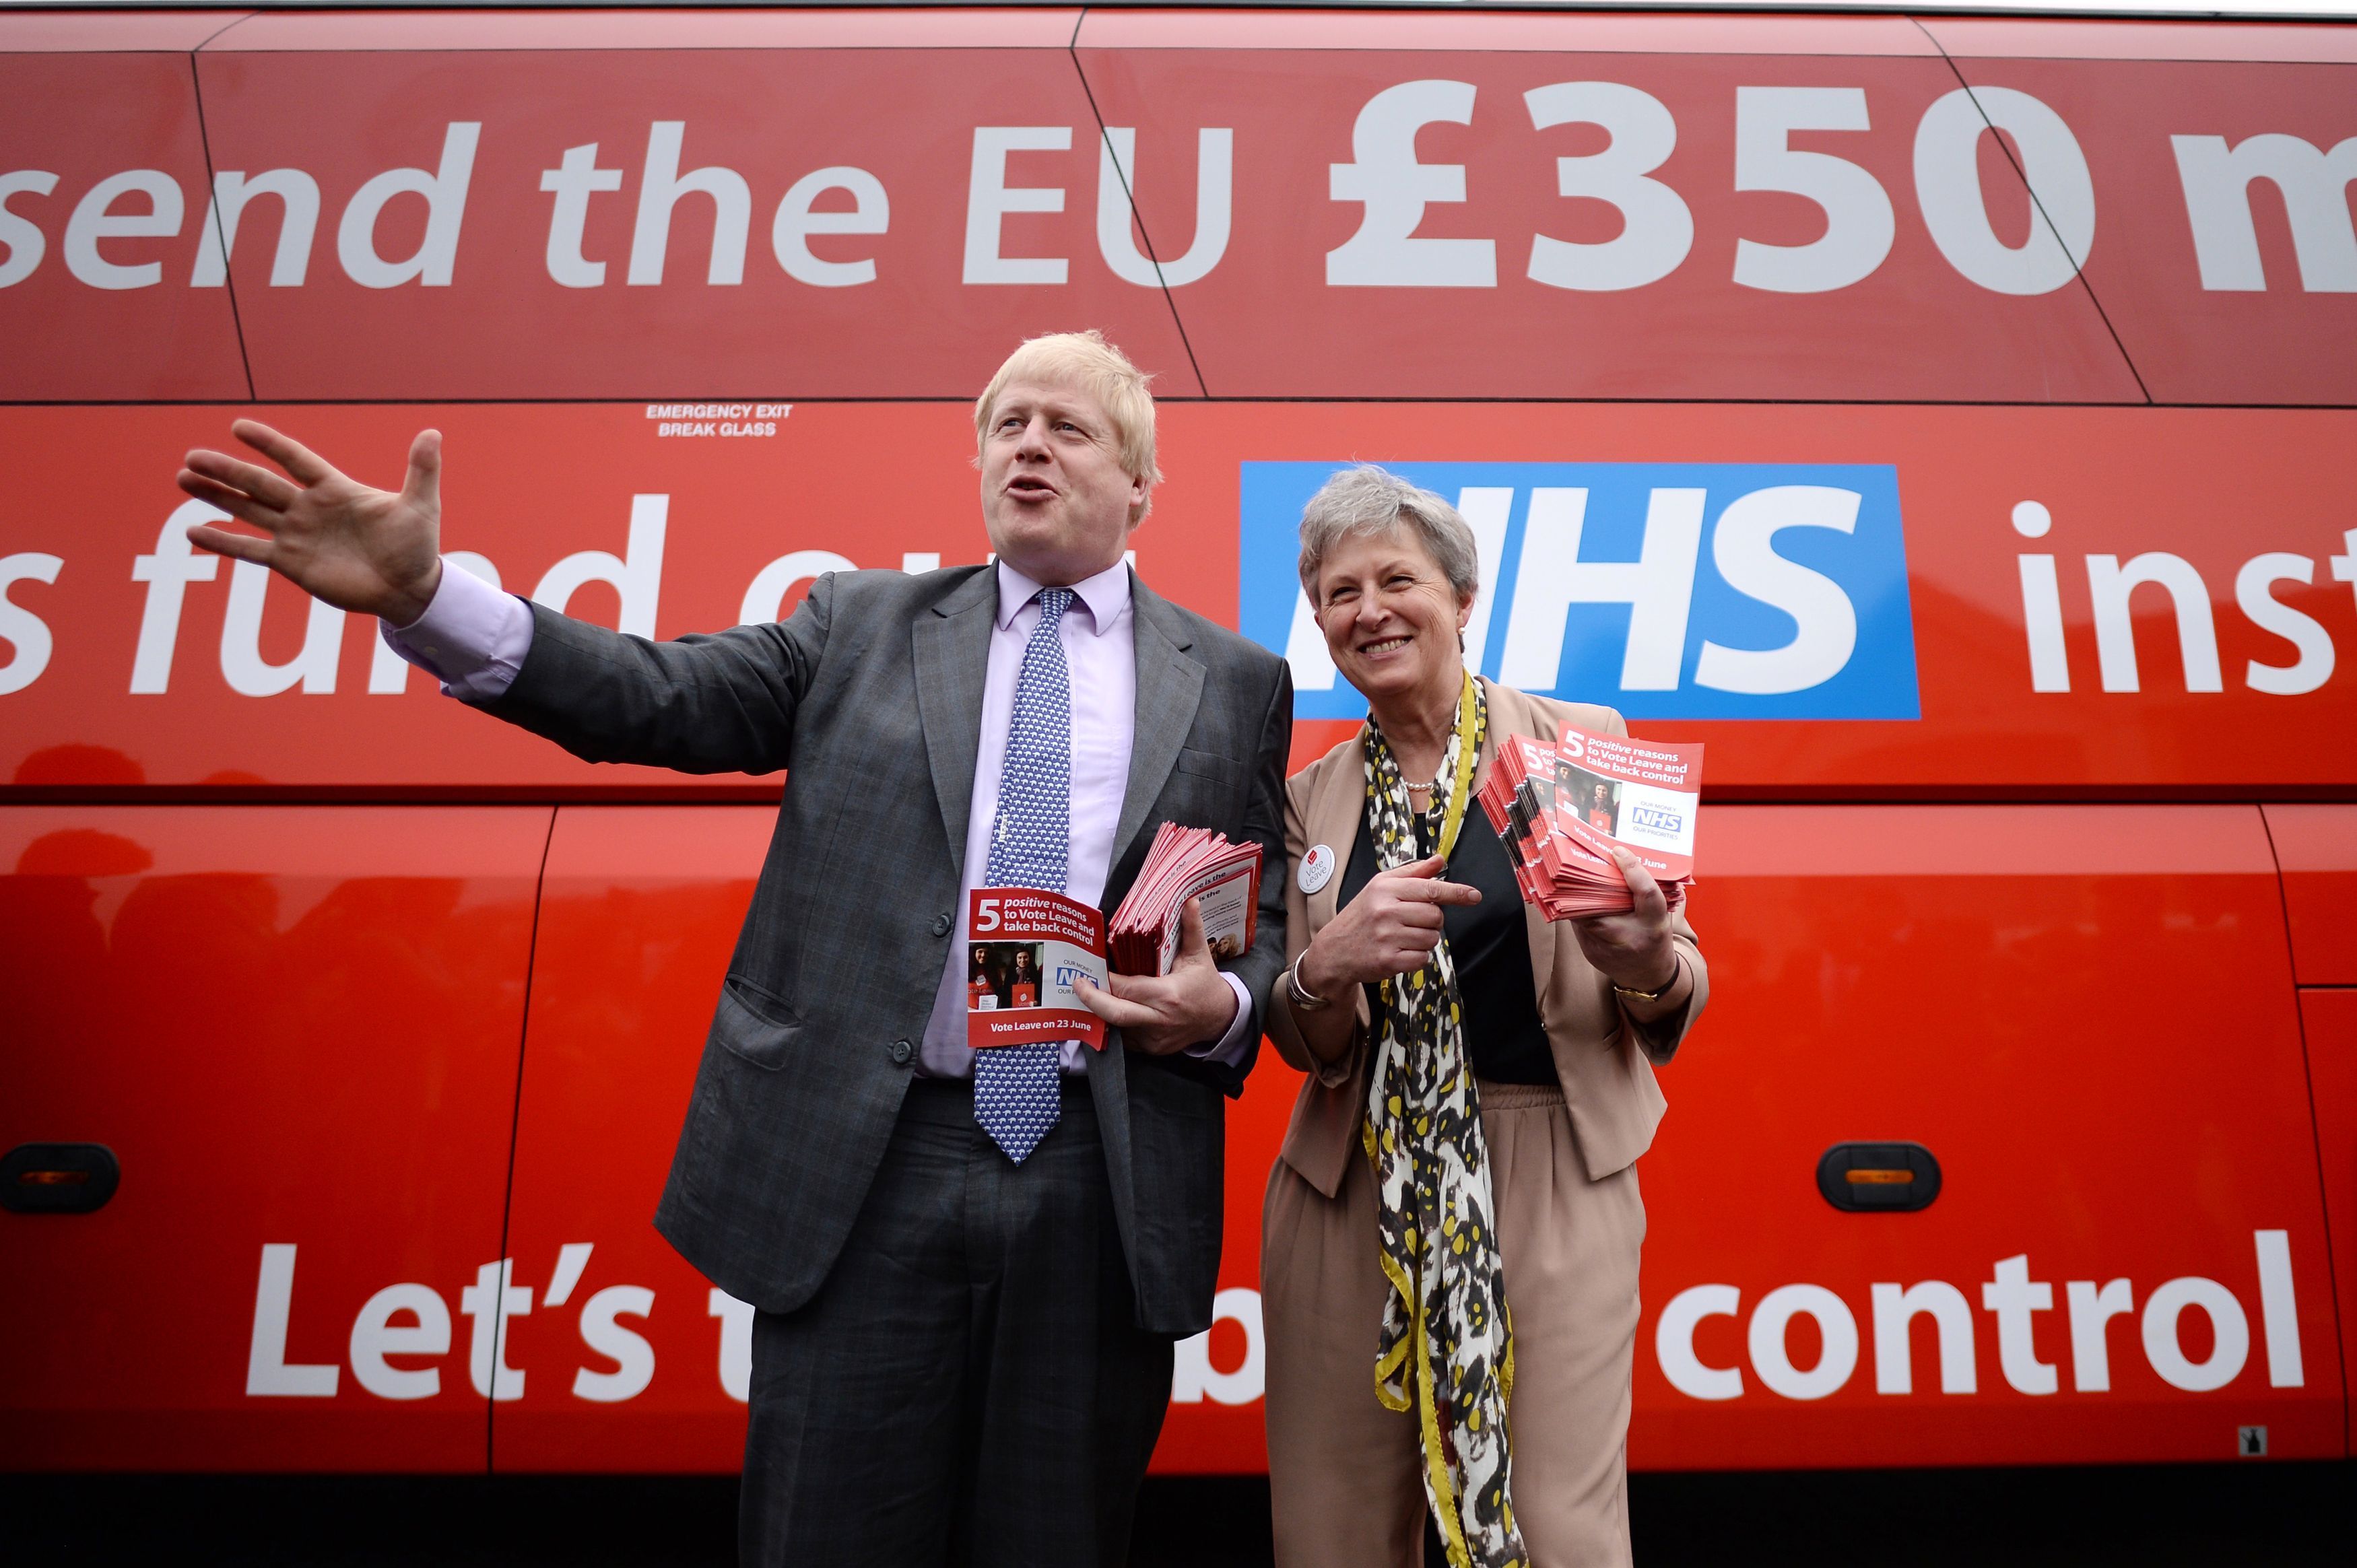 Boris Johnson £350m bus